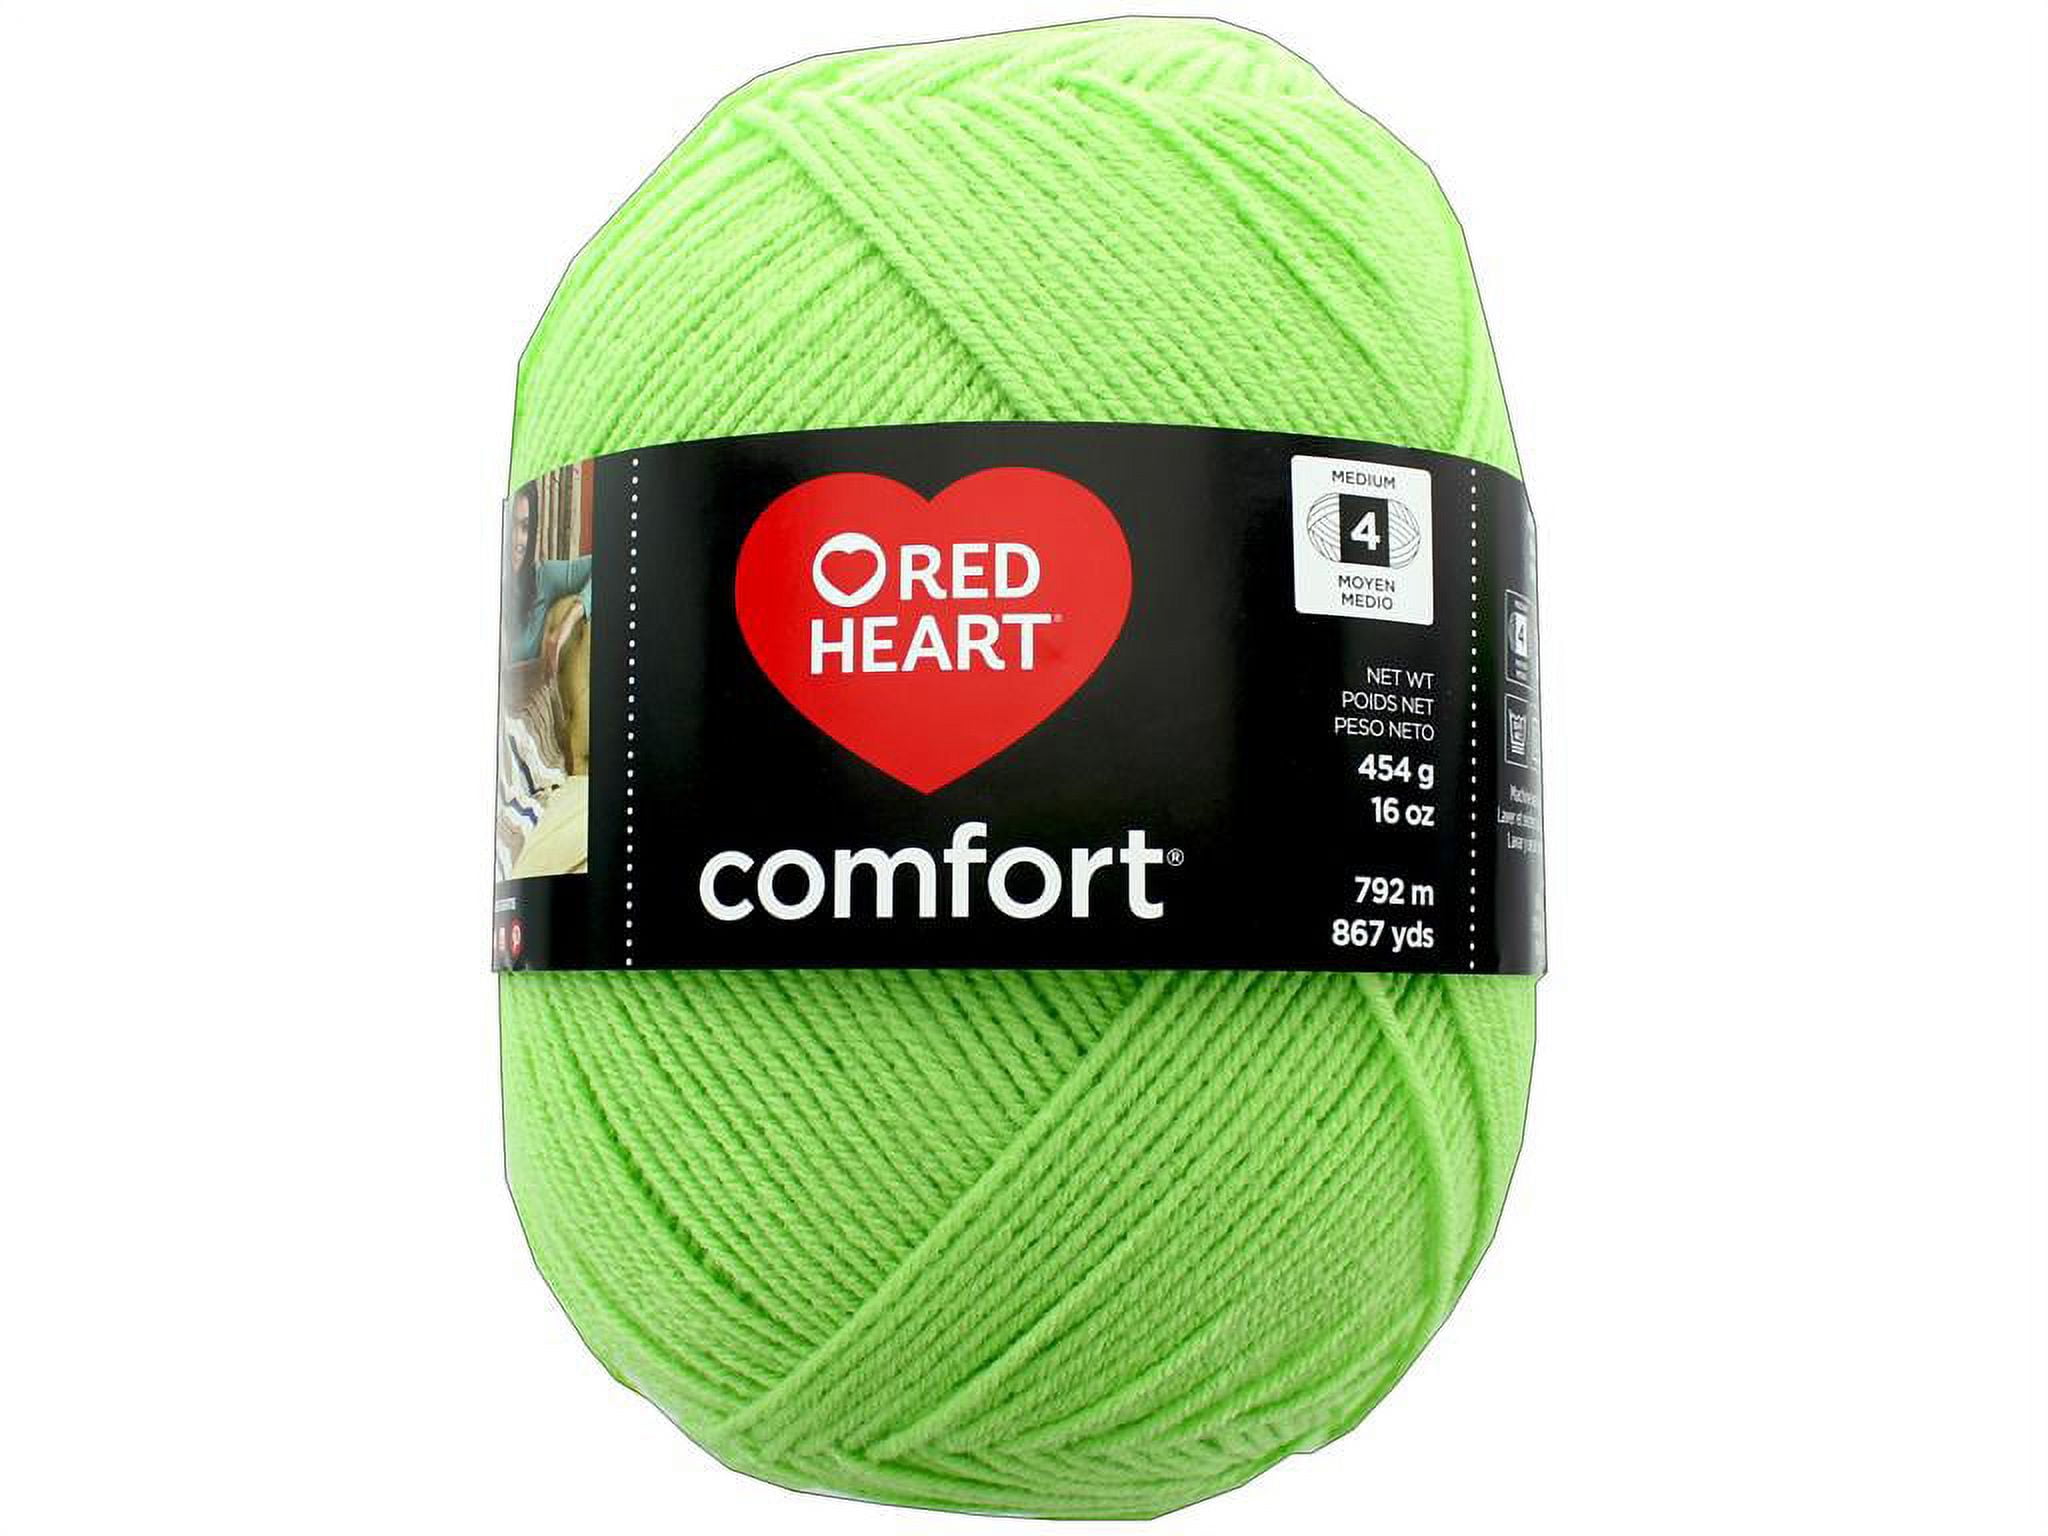 C&C Red Heart Comfort Yarn 16oz Melon - Walmart.com